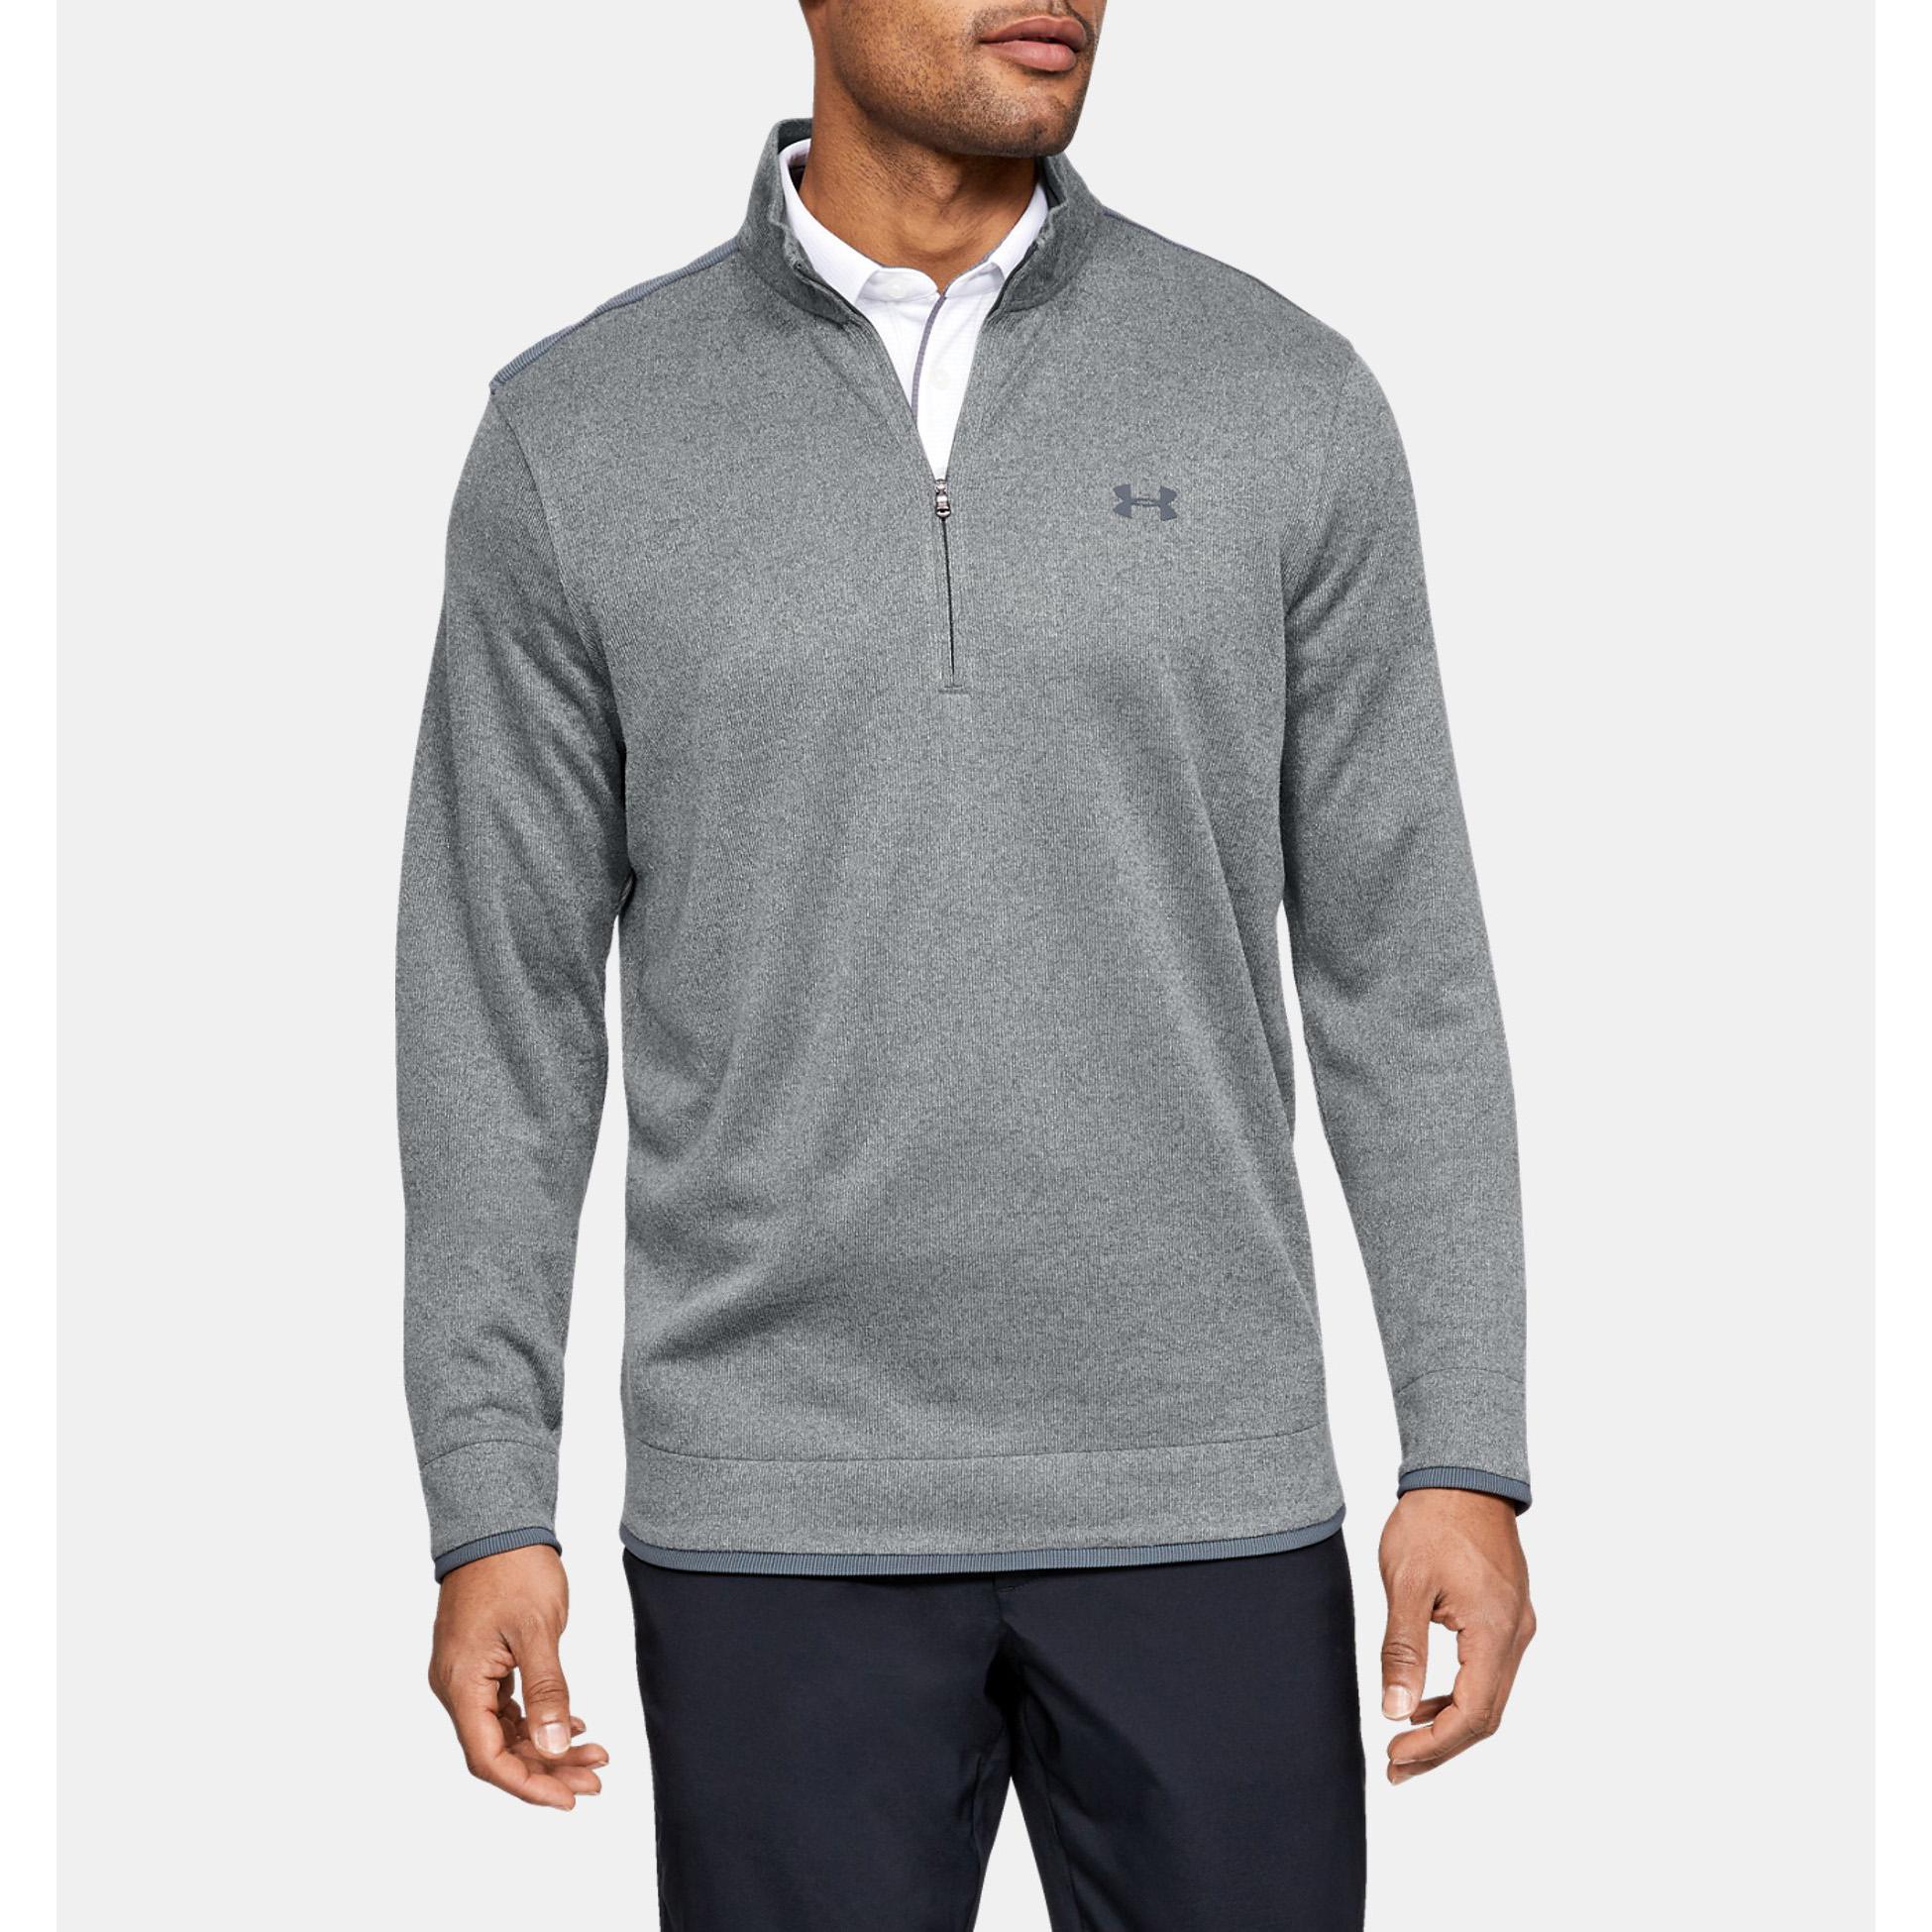 Under Armour Men's UA SweaterFleece Golf 1/2 Zip for $30 Shipped